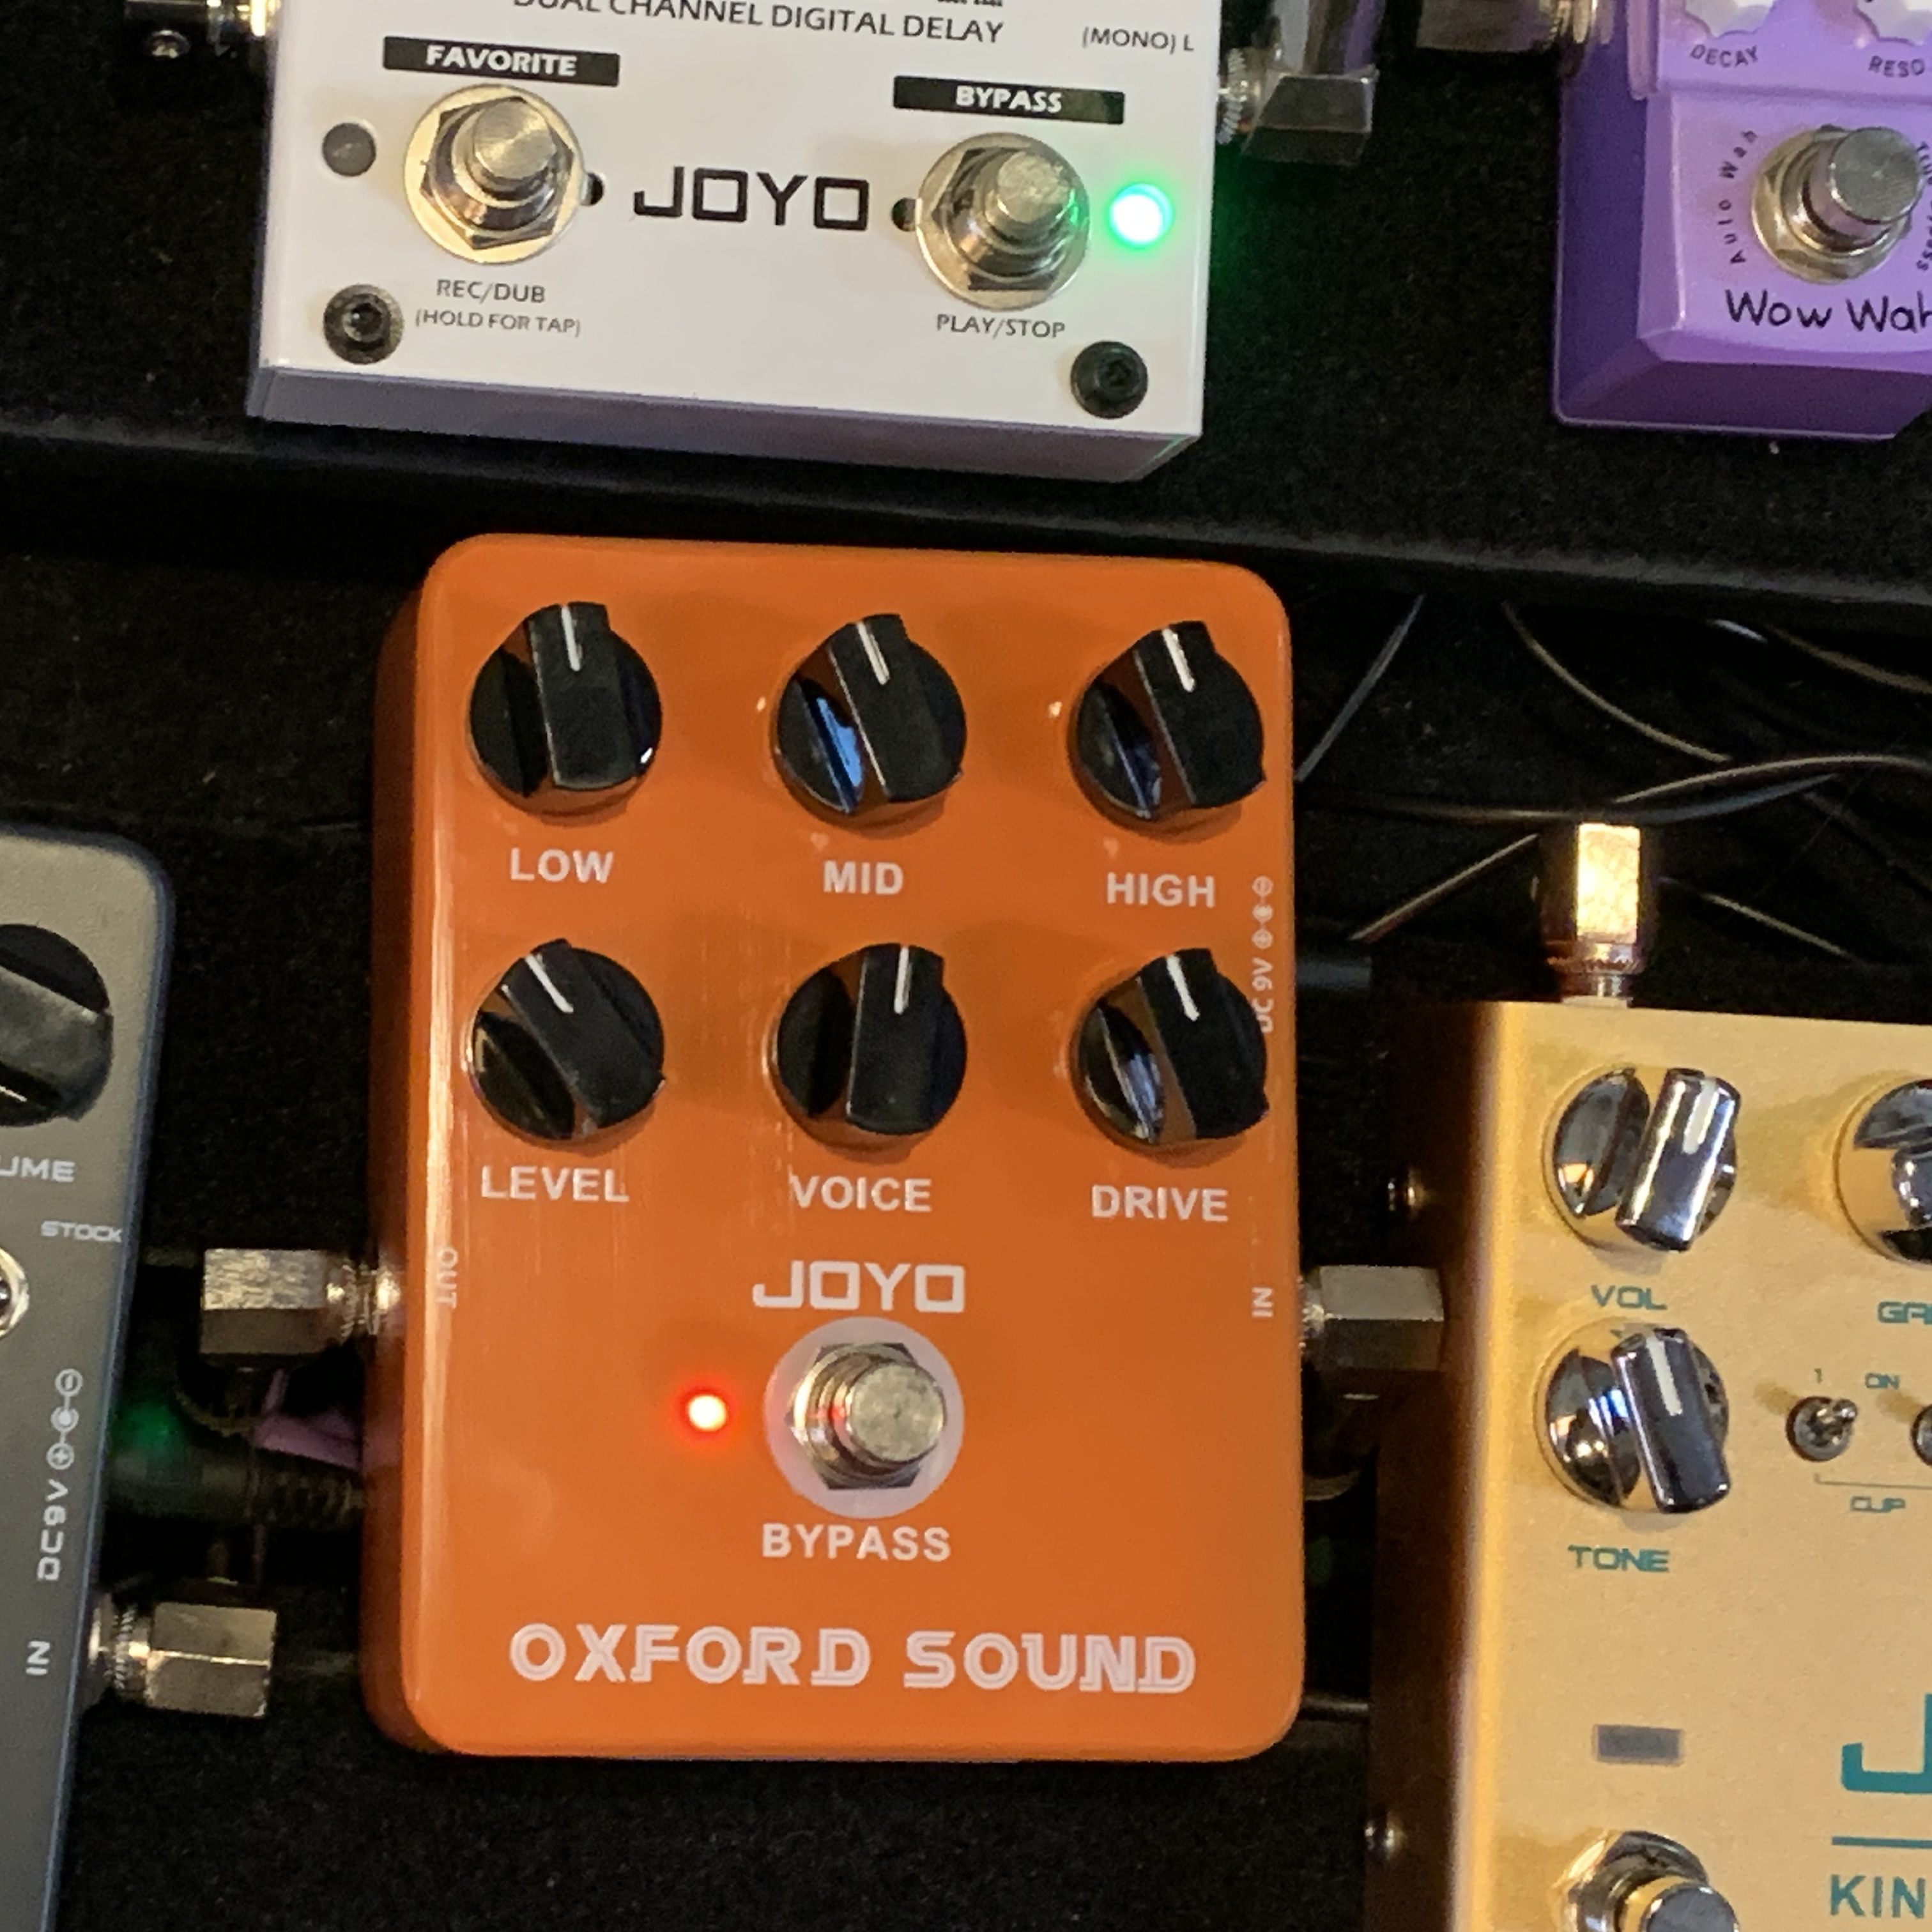 JF-22 JOYO Oxford - JOYO JF-22 Oxford Sound Guitar Effect Pedal - Amplifier Sim - Amplifier Simulation by JOYO